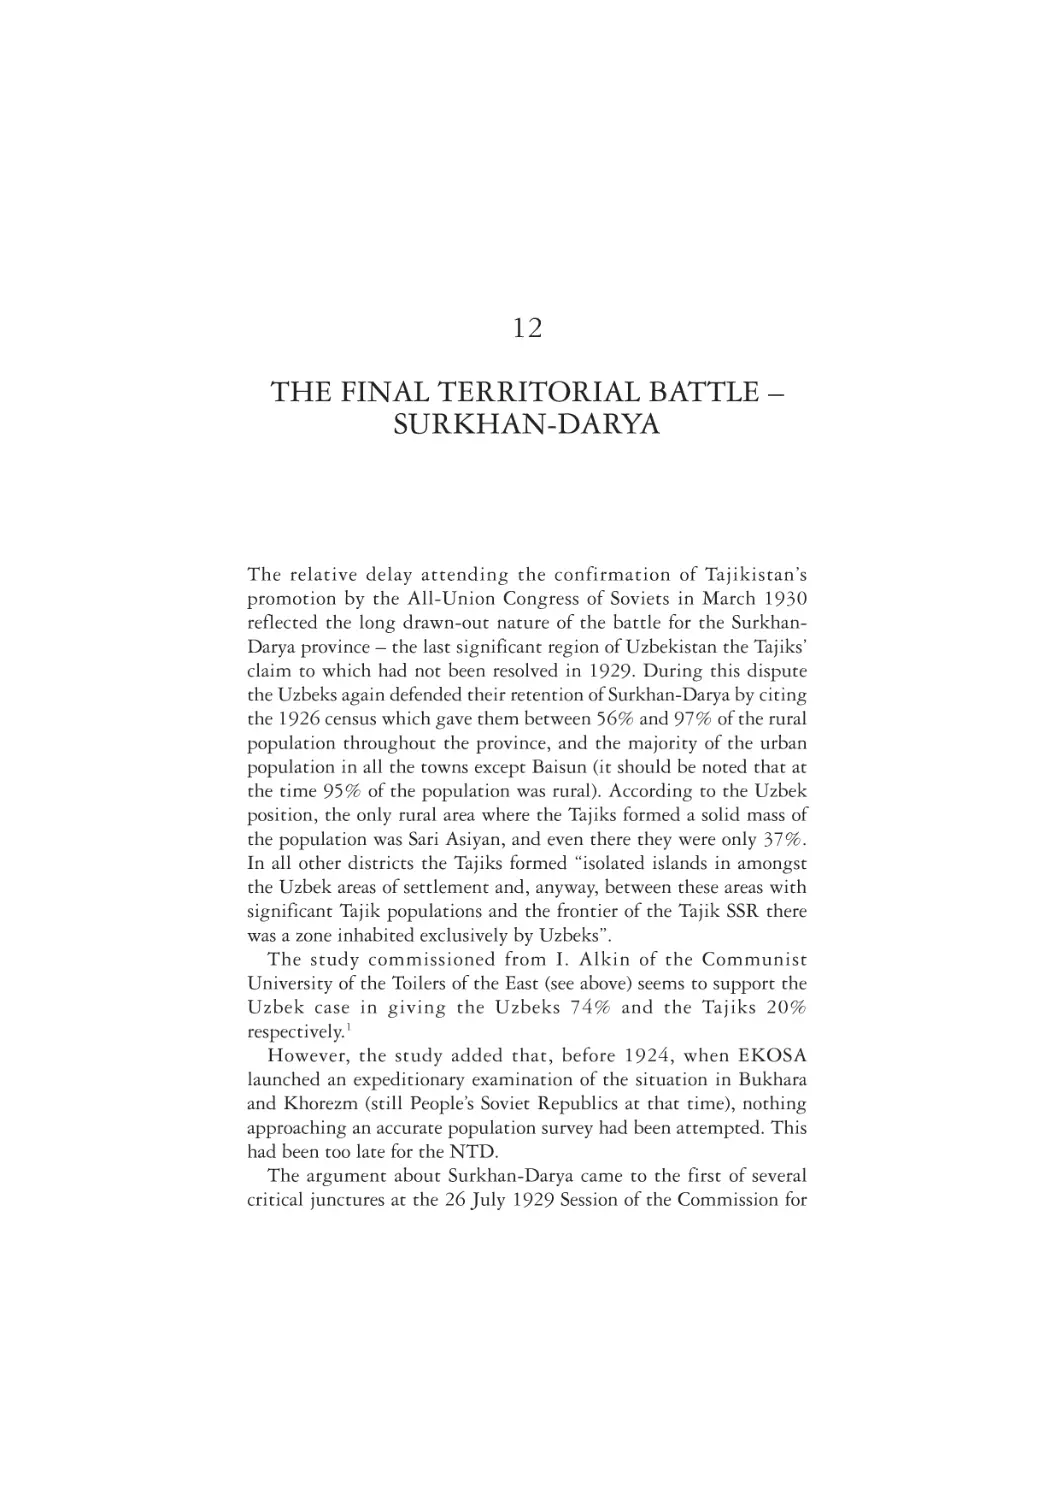 12. The Final Territorial Battle - Surkhan-Darya